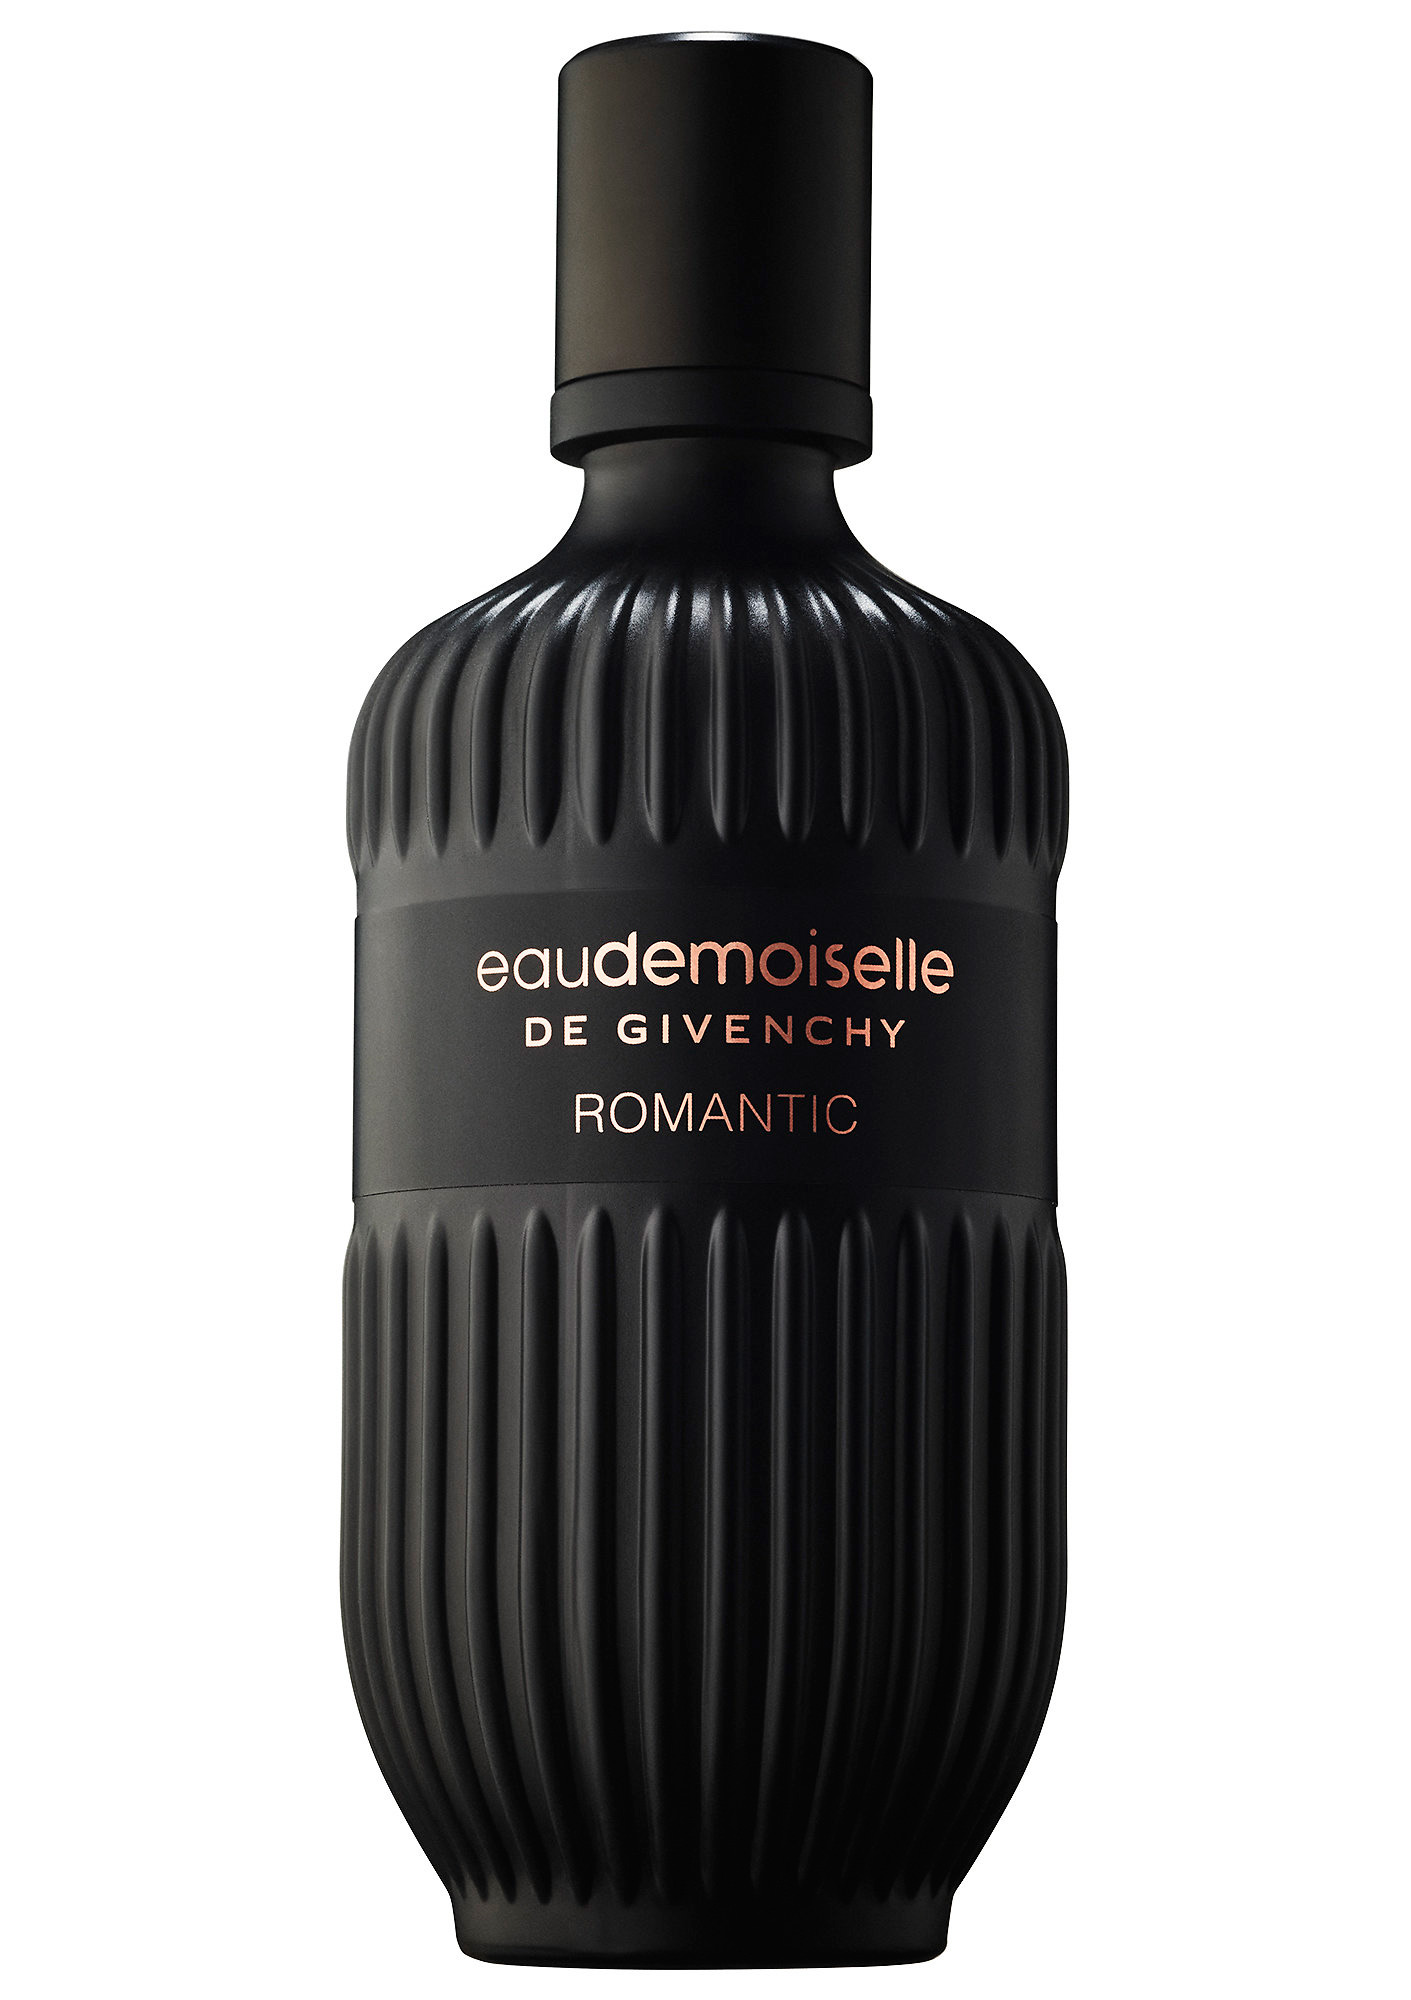 Eaudemoiselle de Givenchy Romantic Givenchy аромат — аромат для женщин 2017